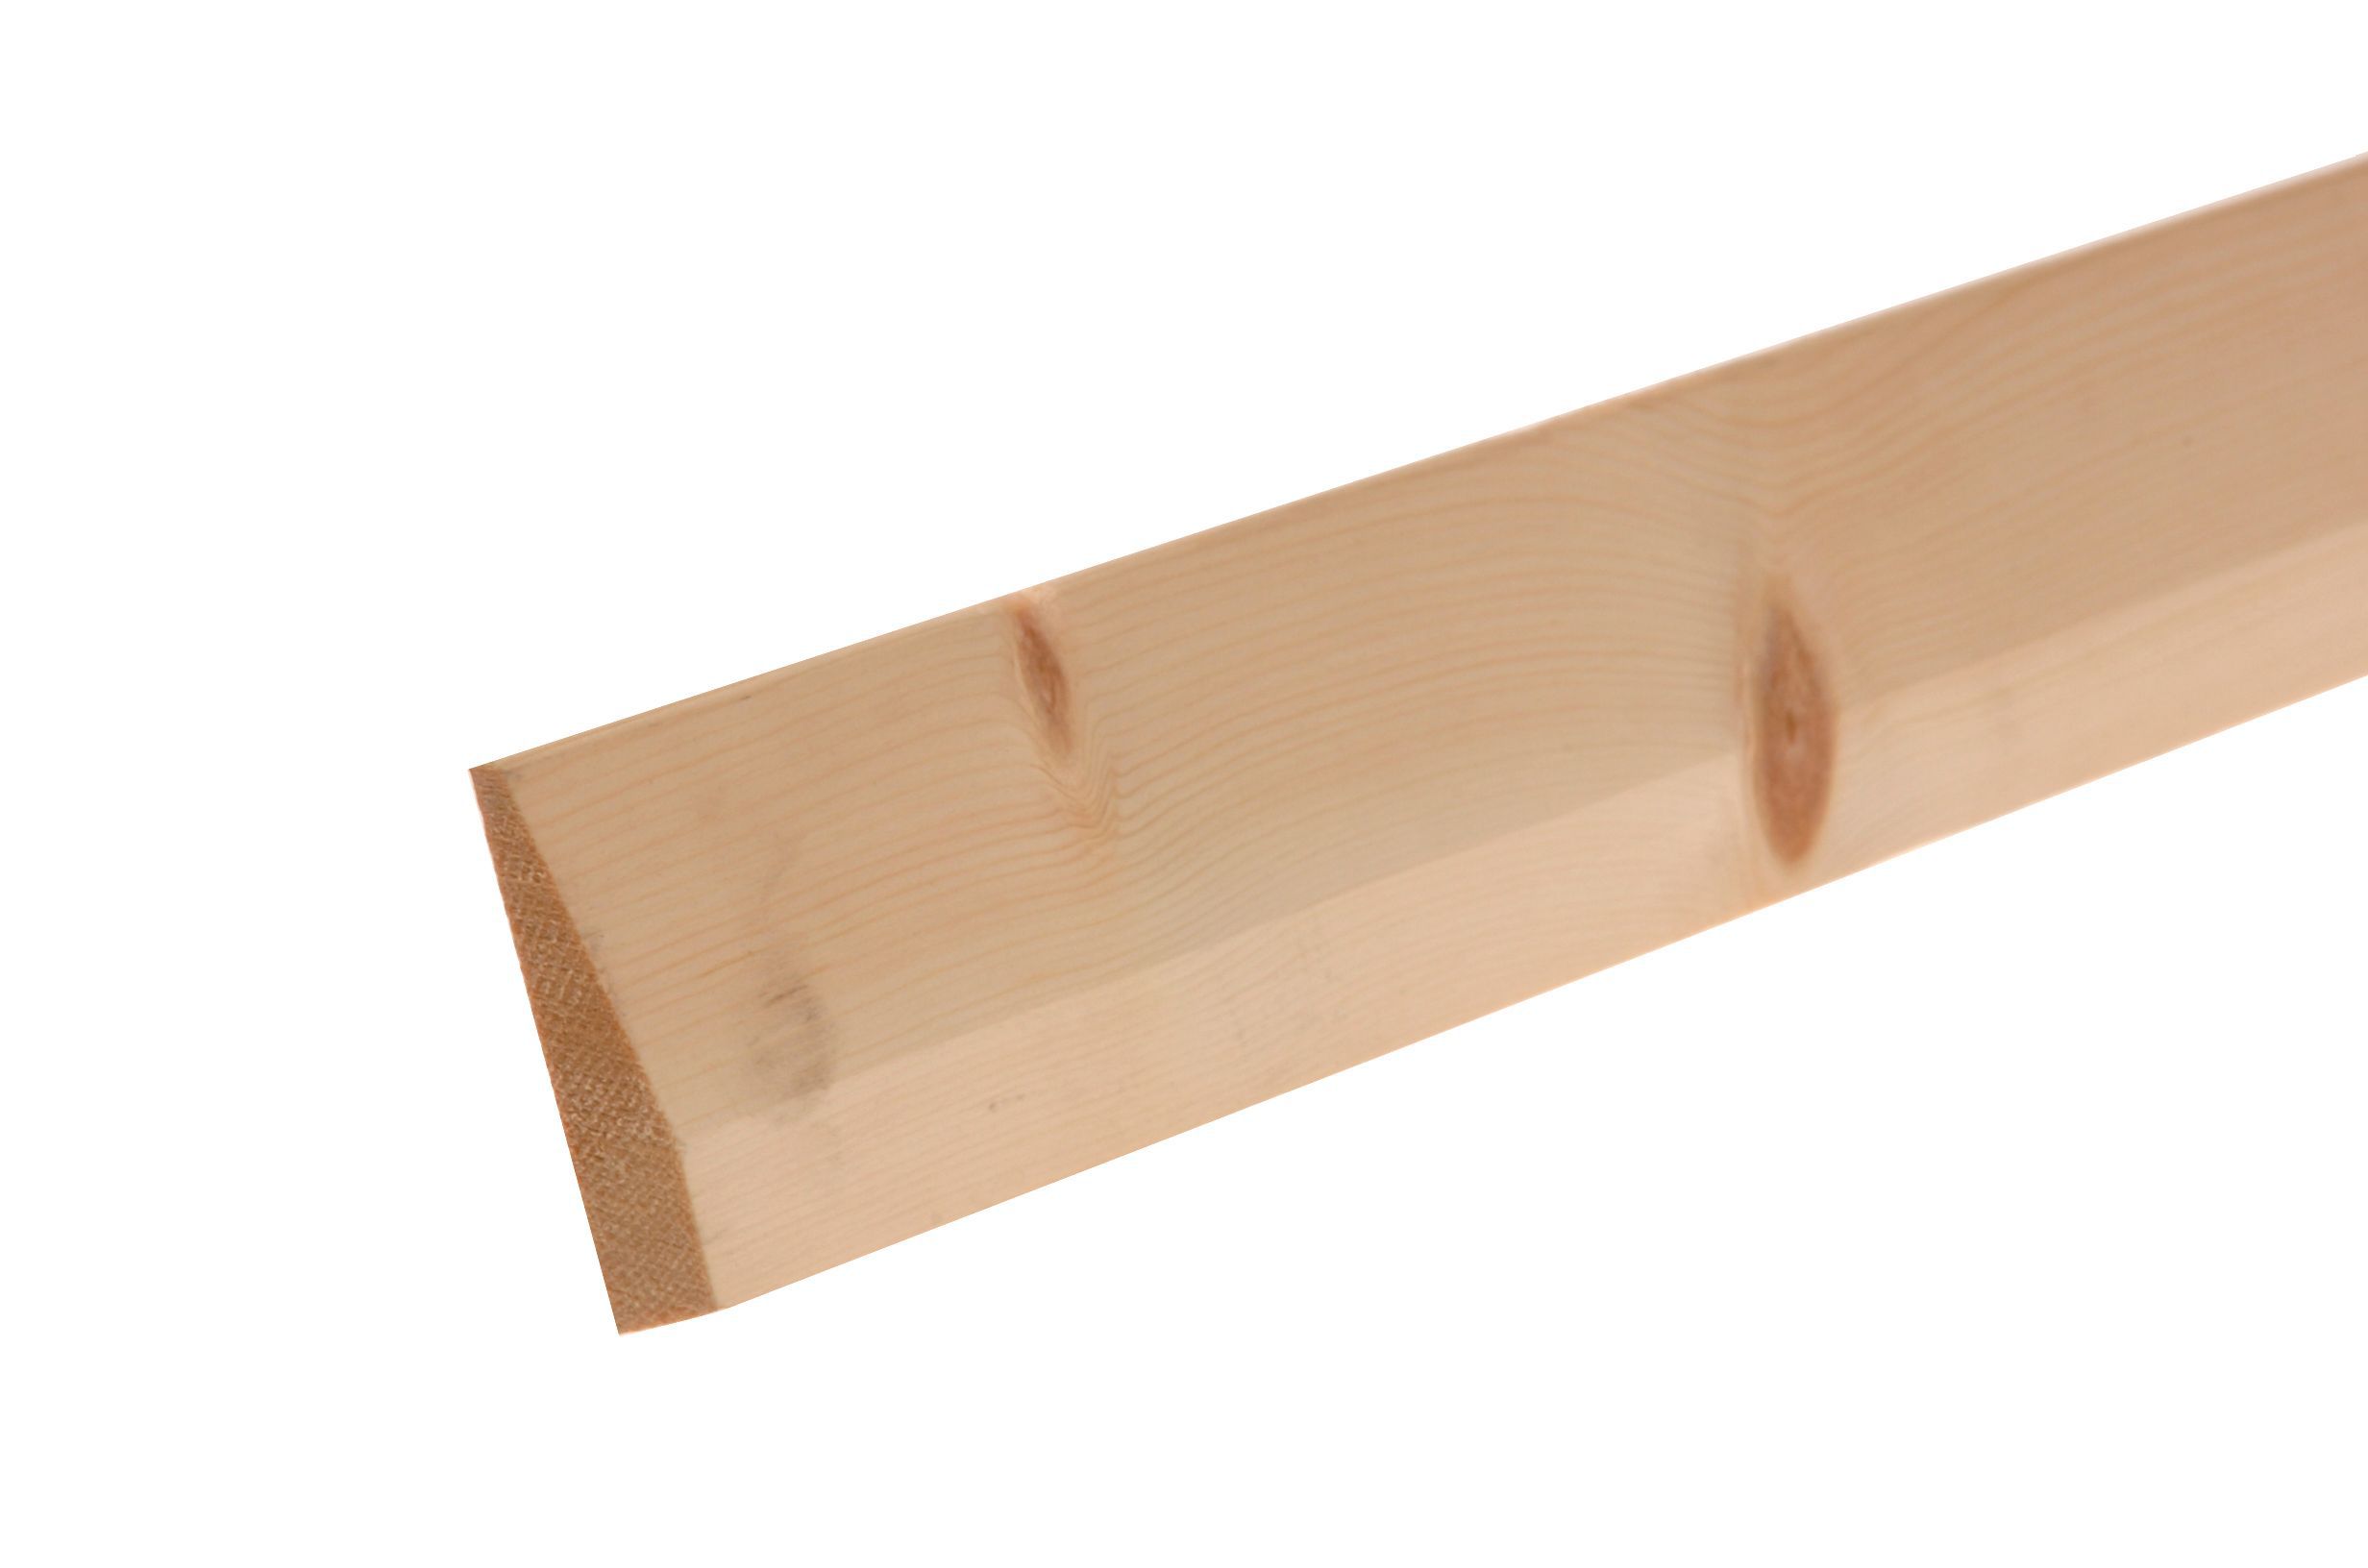 Metsä Wood Pine Chamfered Skirting board (L)2.4m (W)94mm (T)15mm